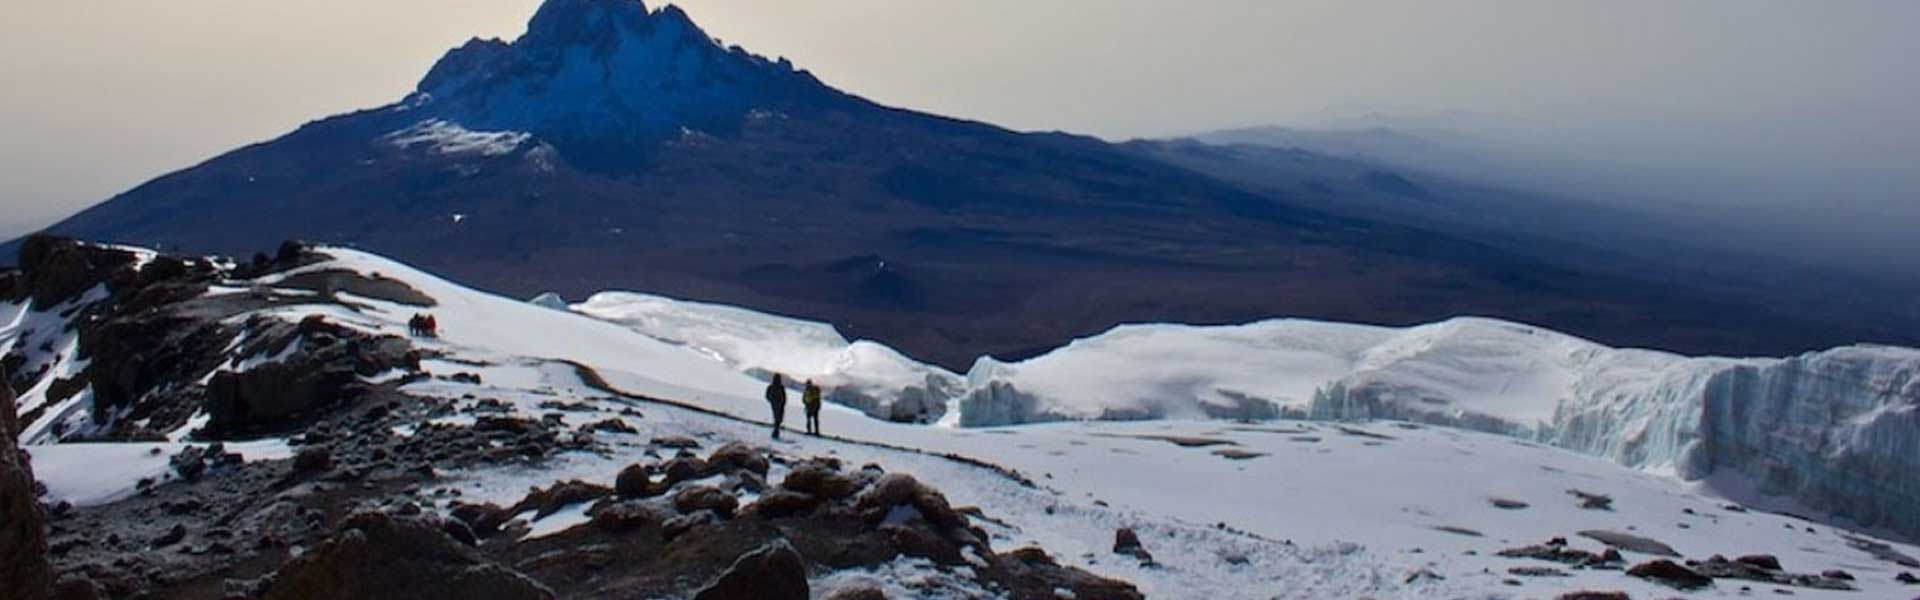 Insurance for climbing Mount Kilimanjaro